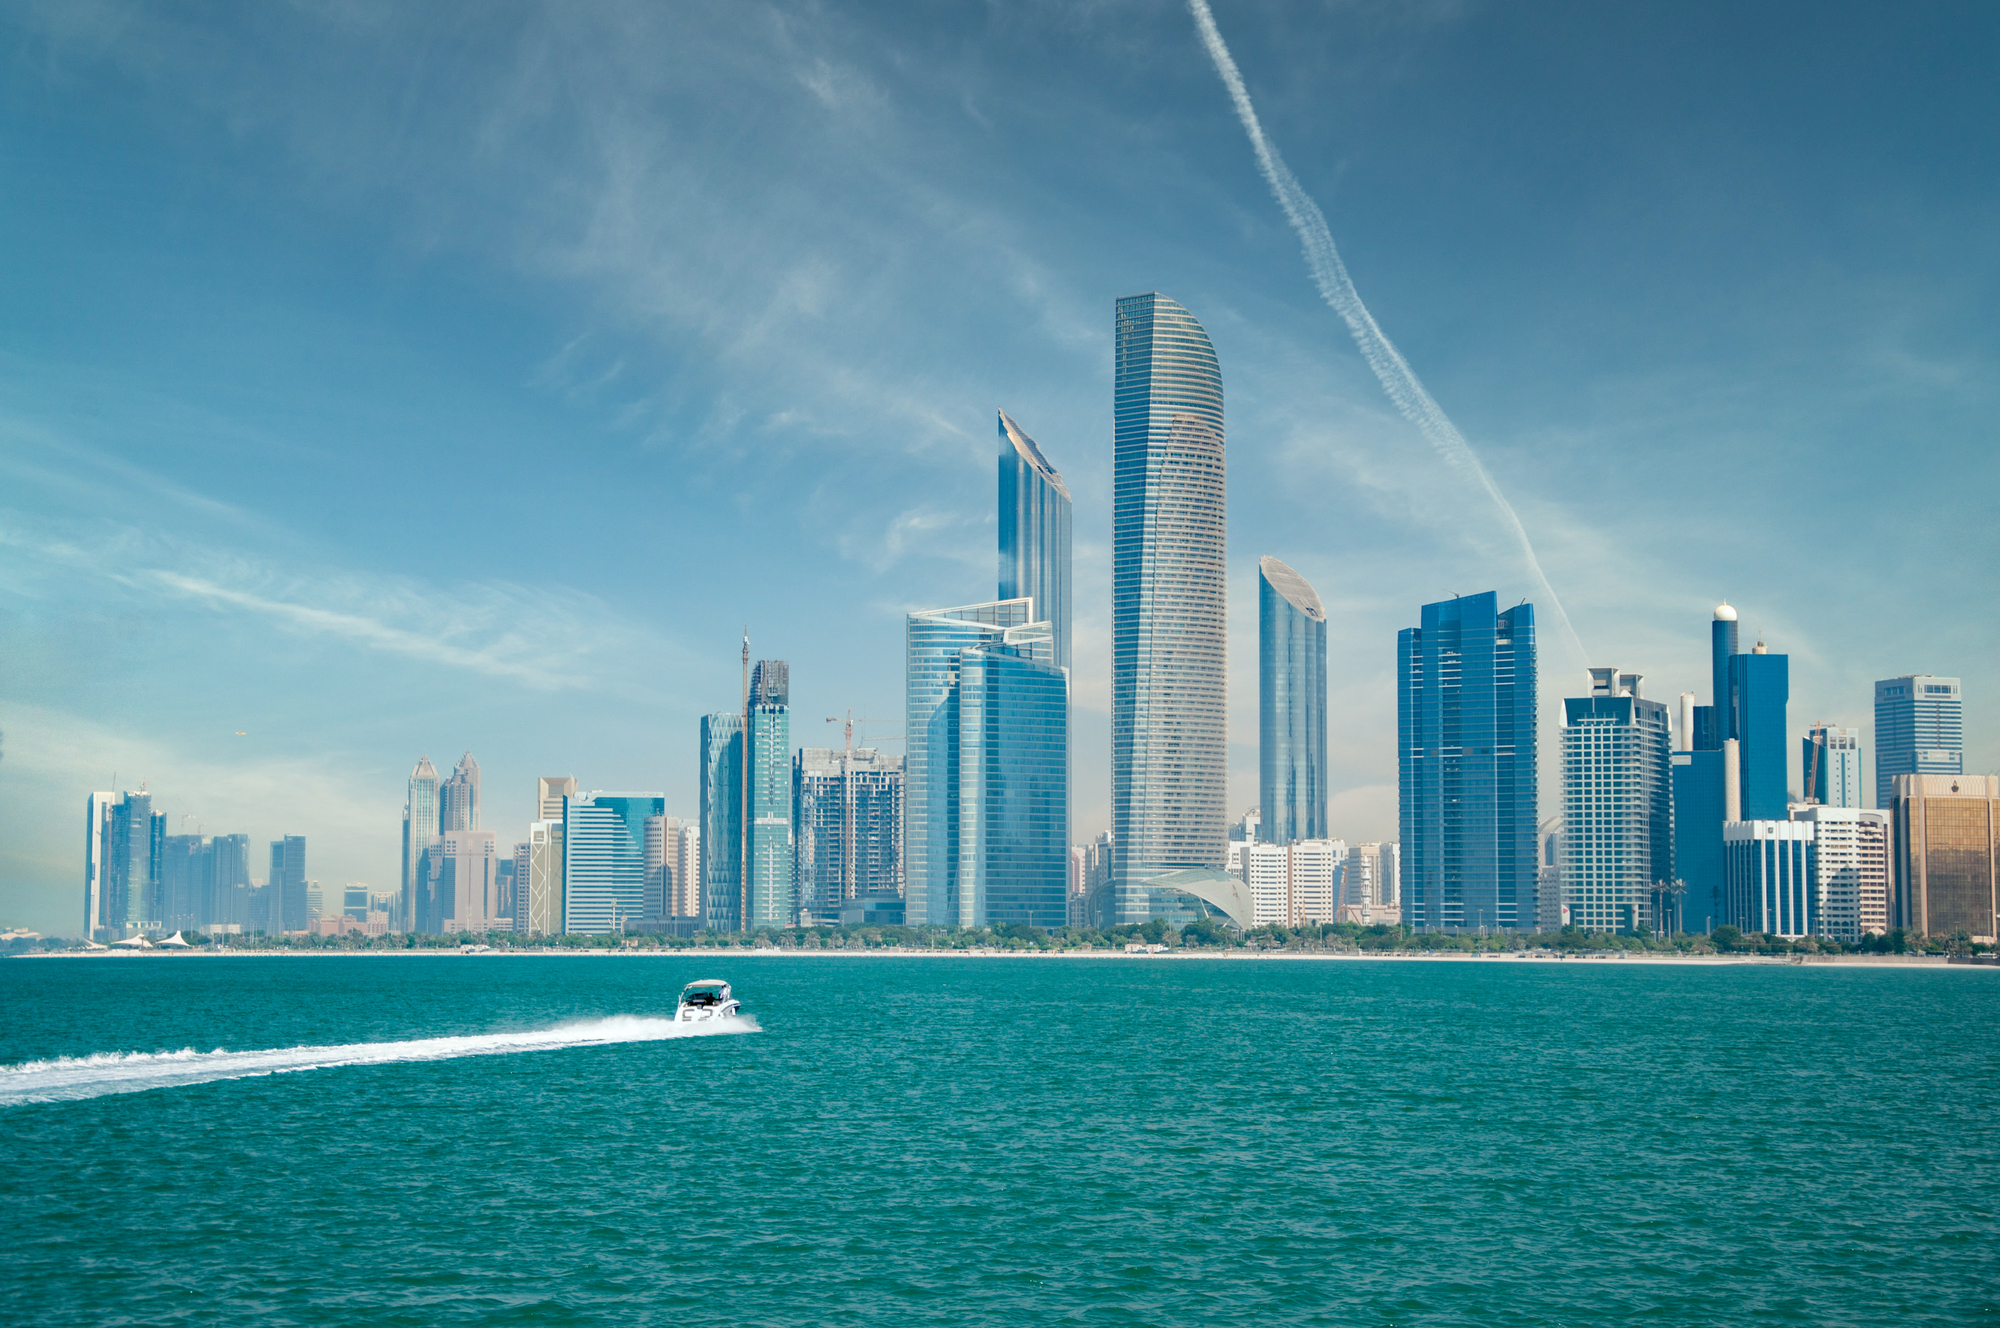 Abu Dhabi, United Arab Emirates skyscrapers and a city skyline